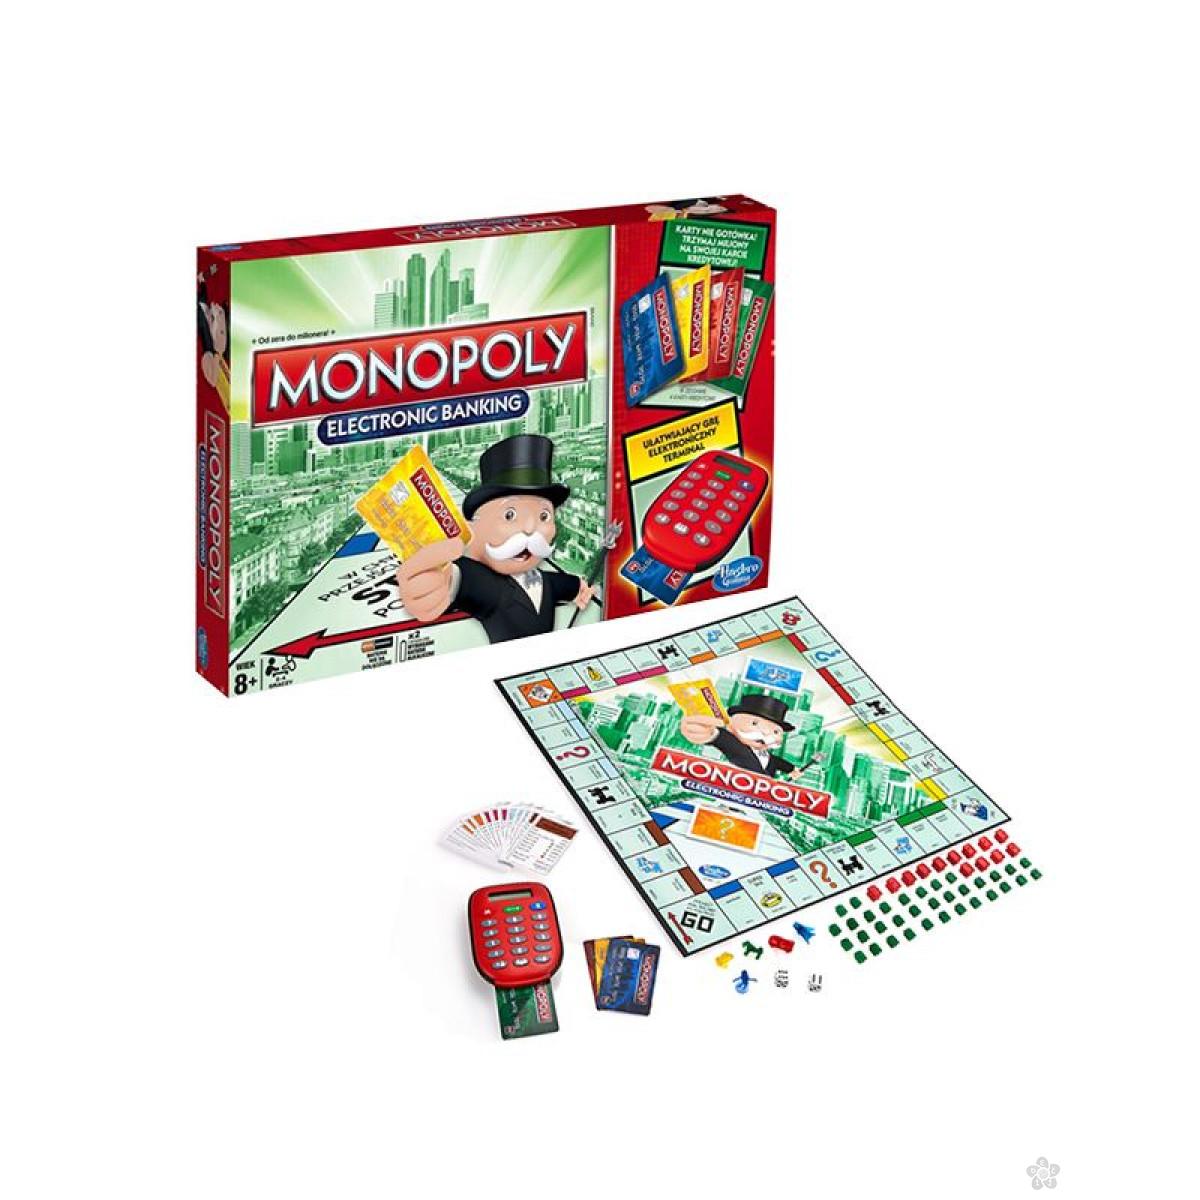 Društvena igra Monopol e-banking, A7444 